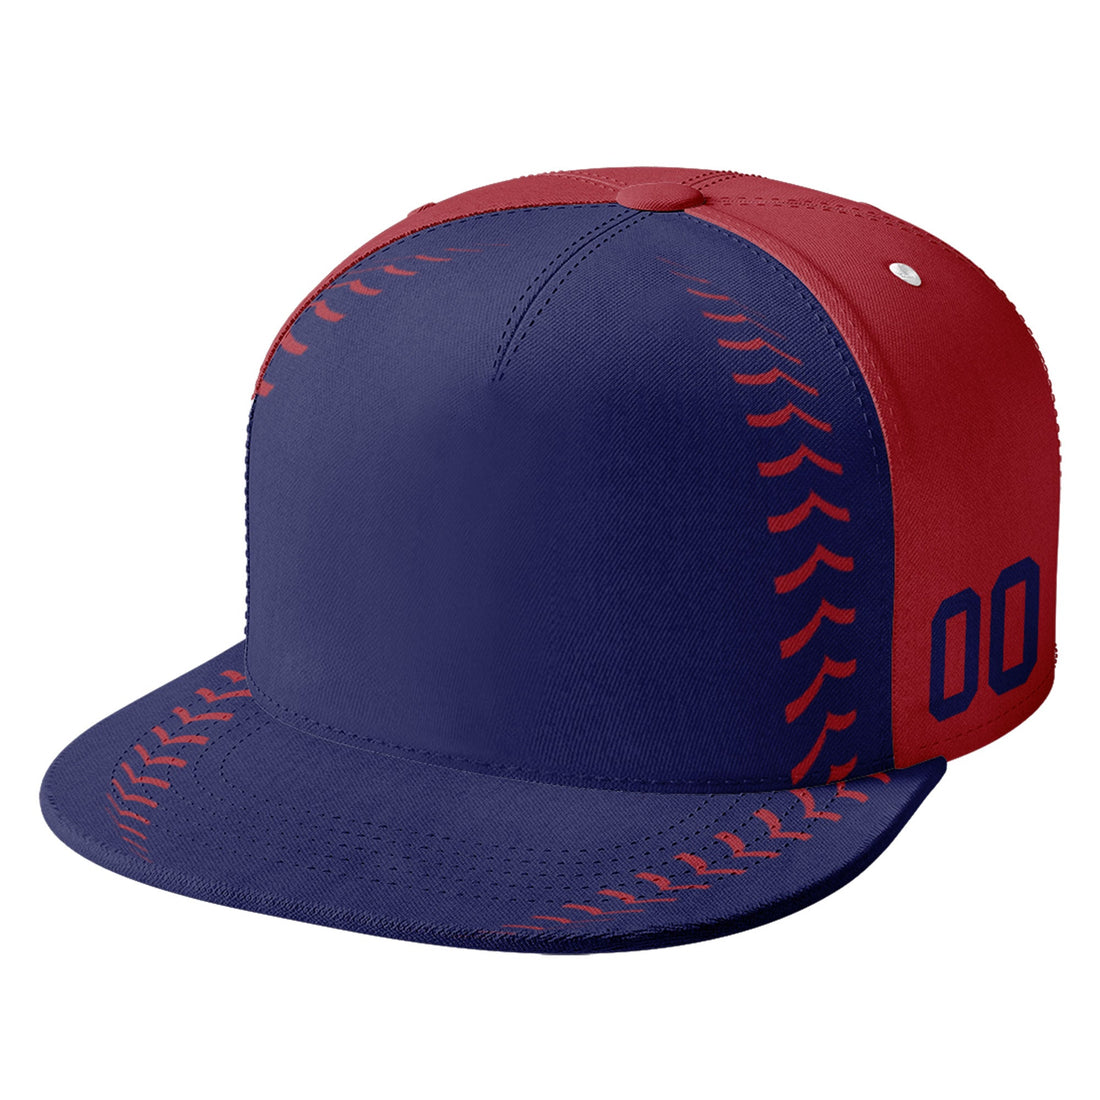 Custom Sport Design Hat Stitched Adjustable Snapback Personalized Baseball Cap PR067B-bd0b00d9-ba